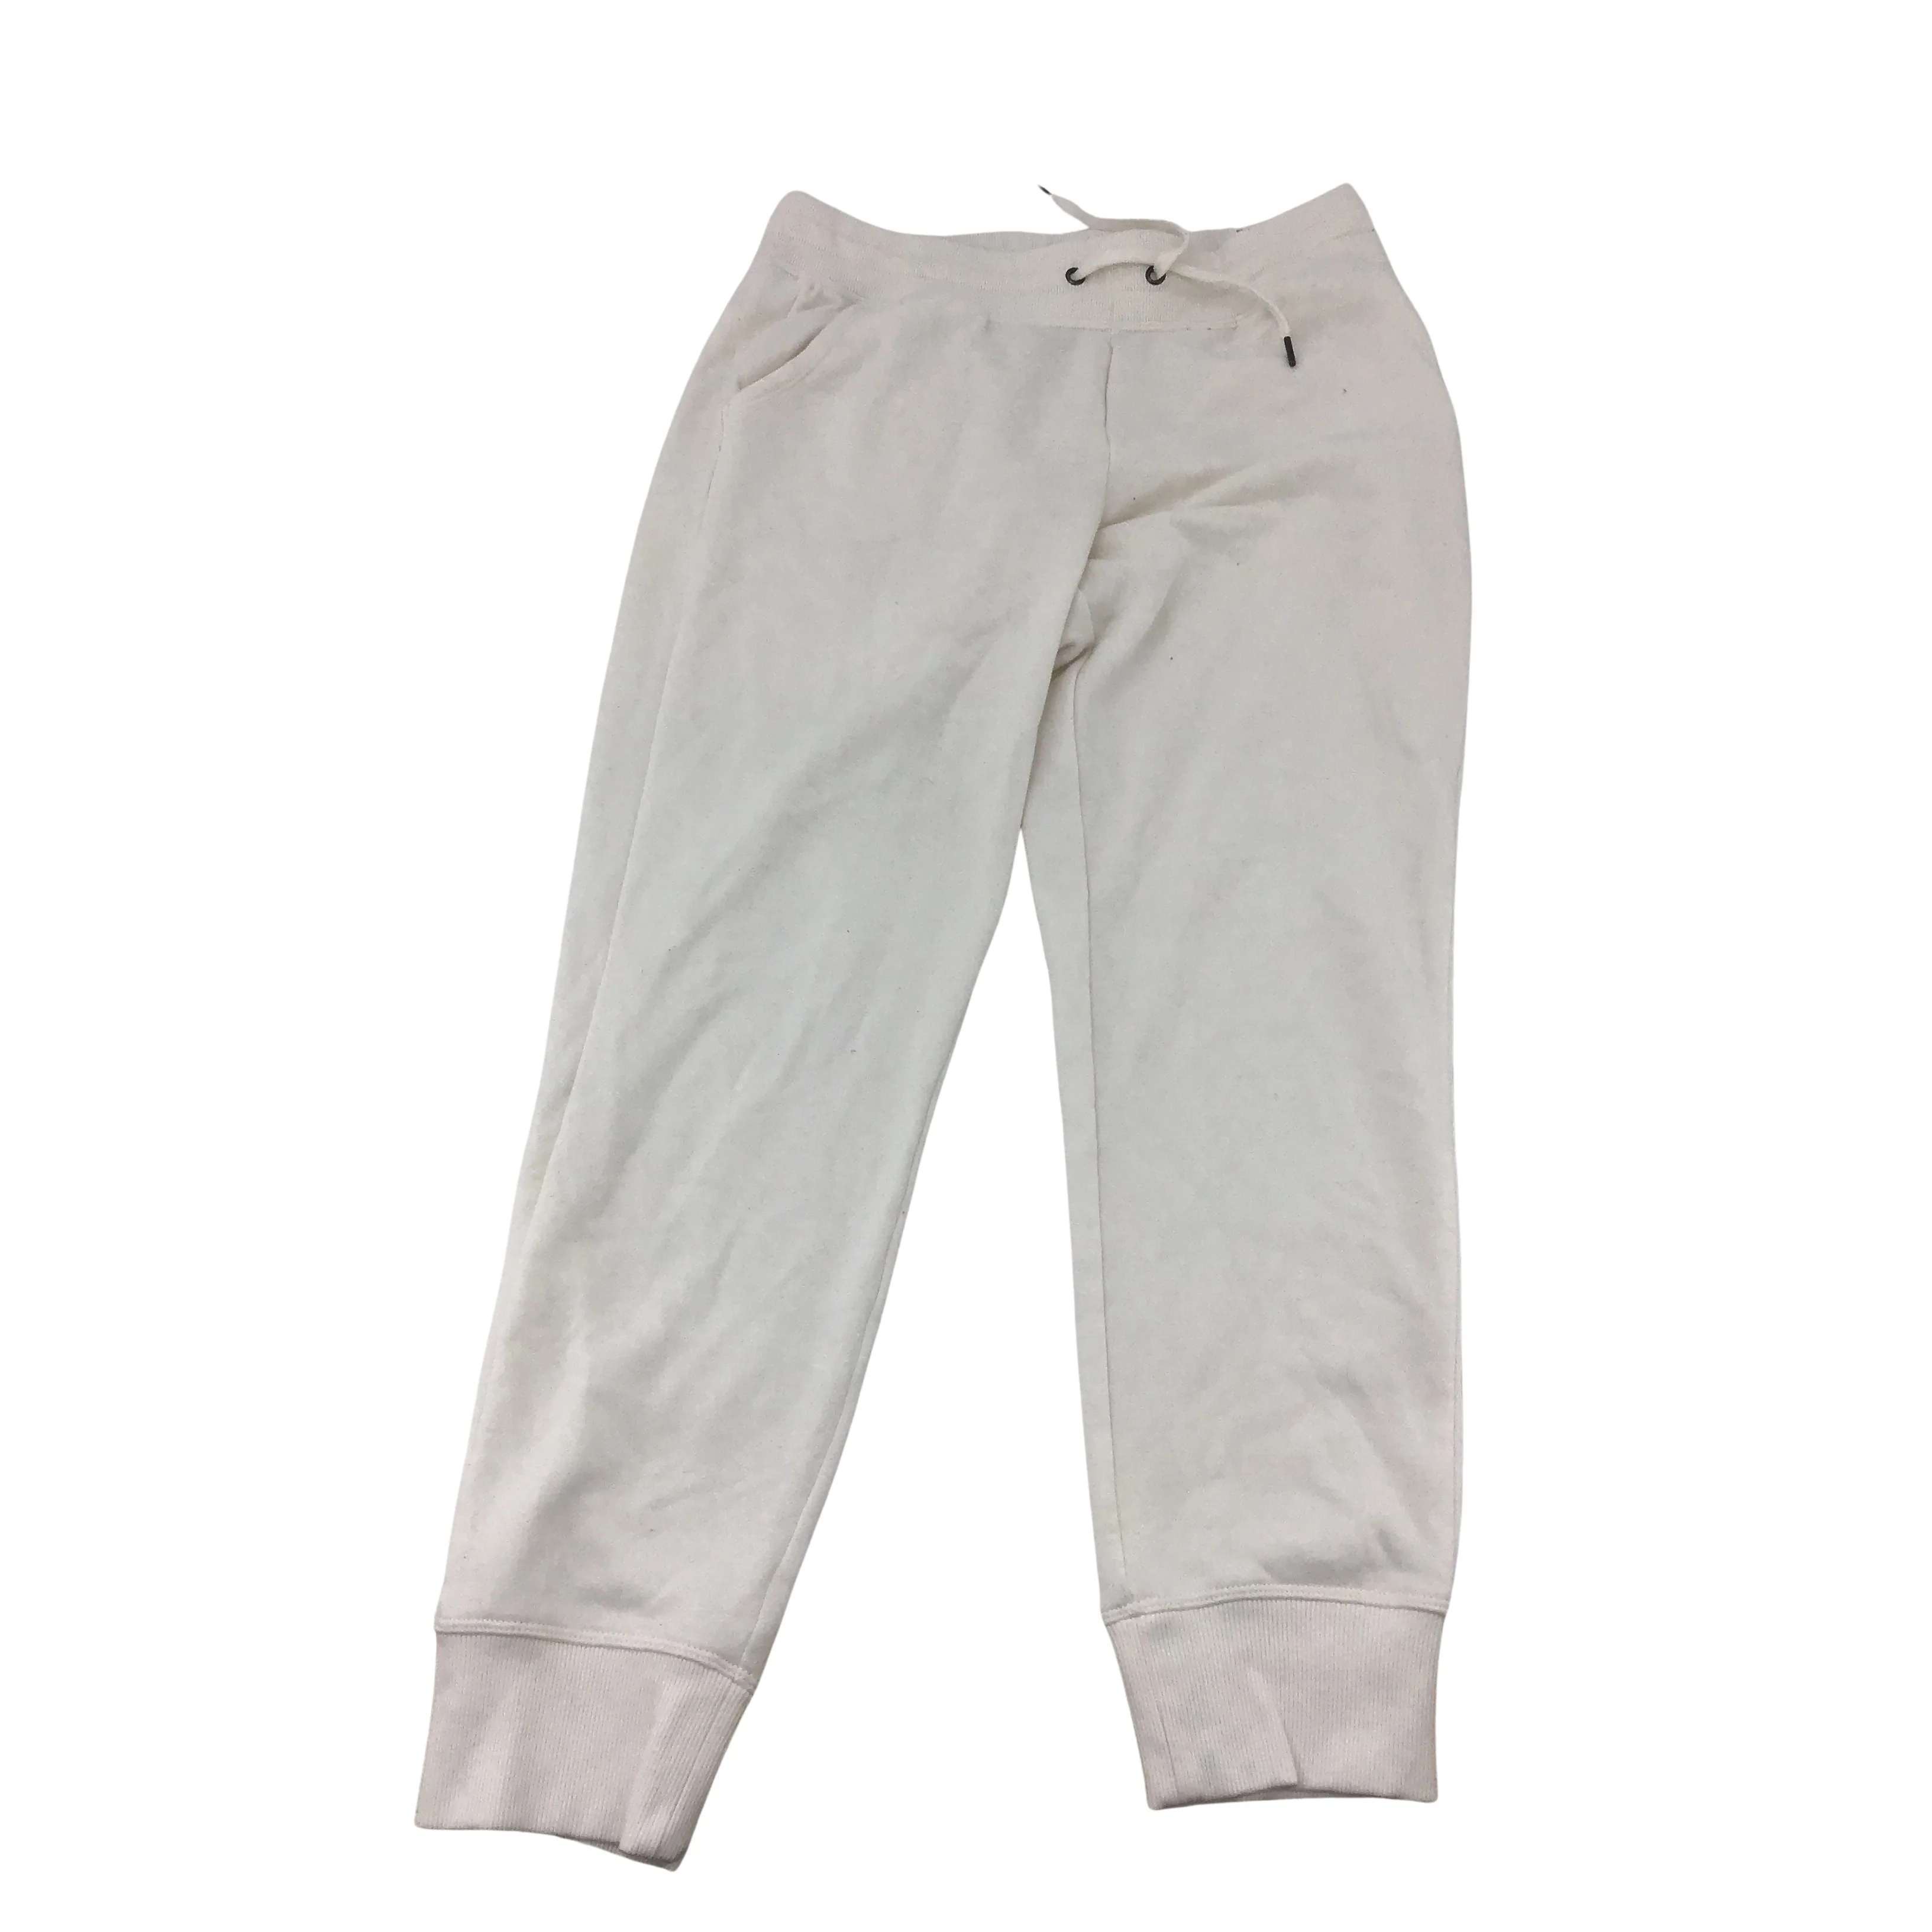 Gaiam Women's Joggers / White / Sweatpants / Various Sizes